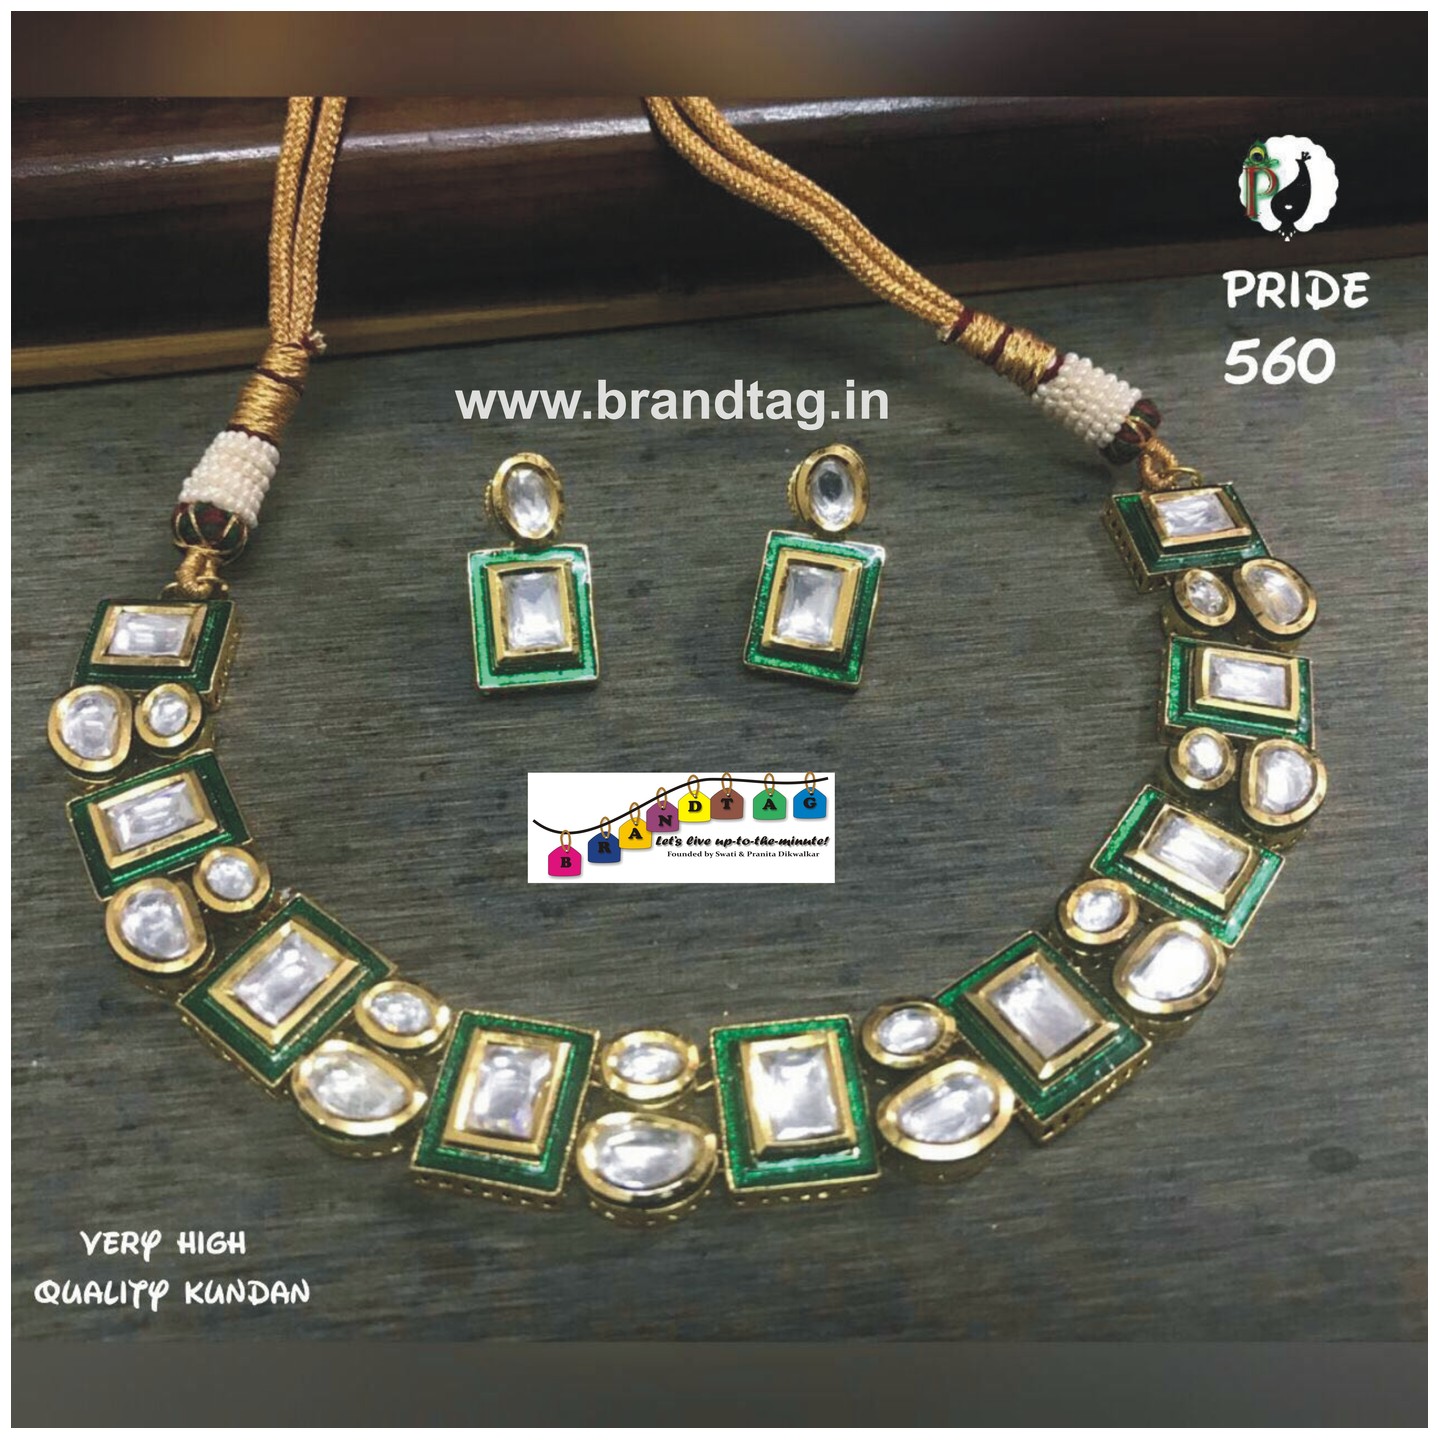 Exquisite Kundan Necklace Set!